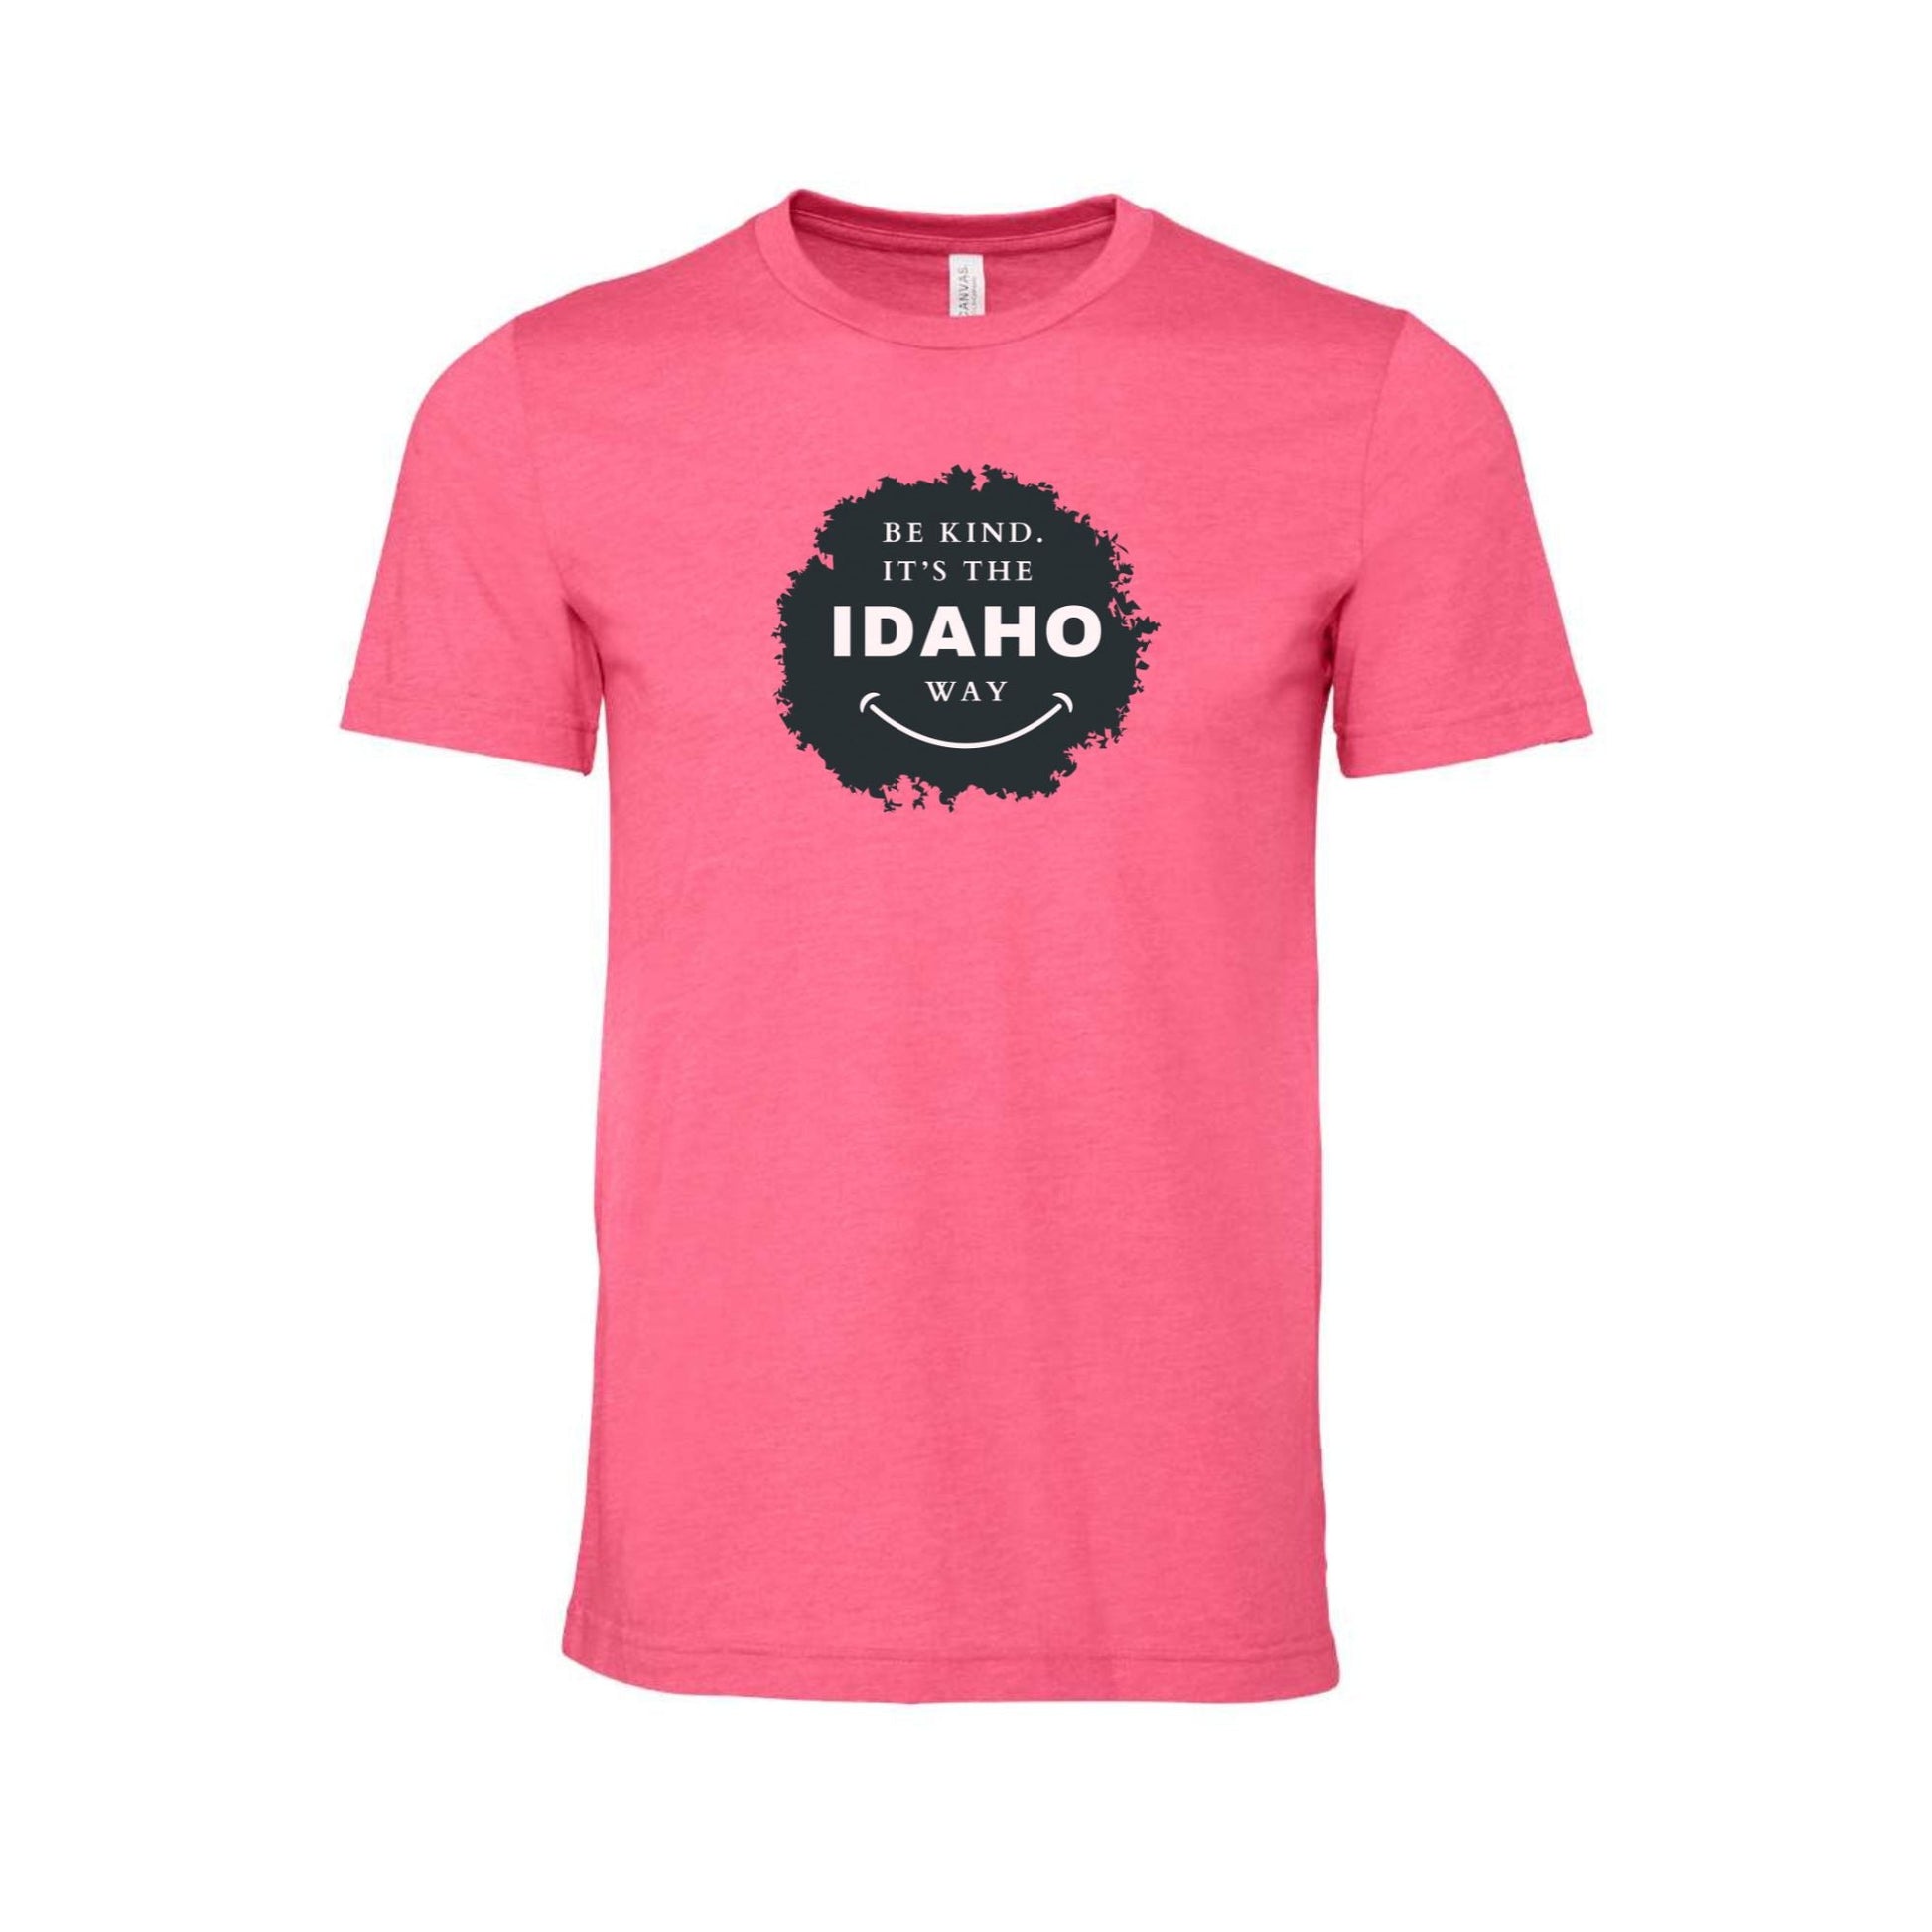 208 Supply Co T-shirt Small / Charity Pink The Idaho Way Unisex Tee